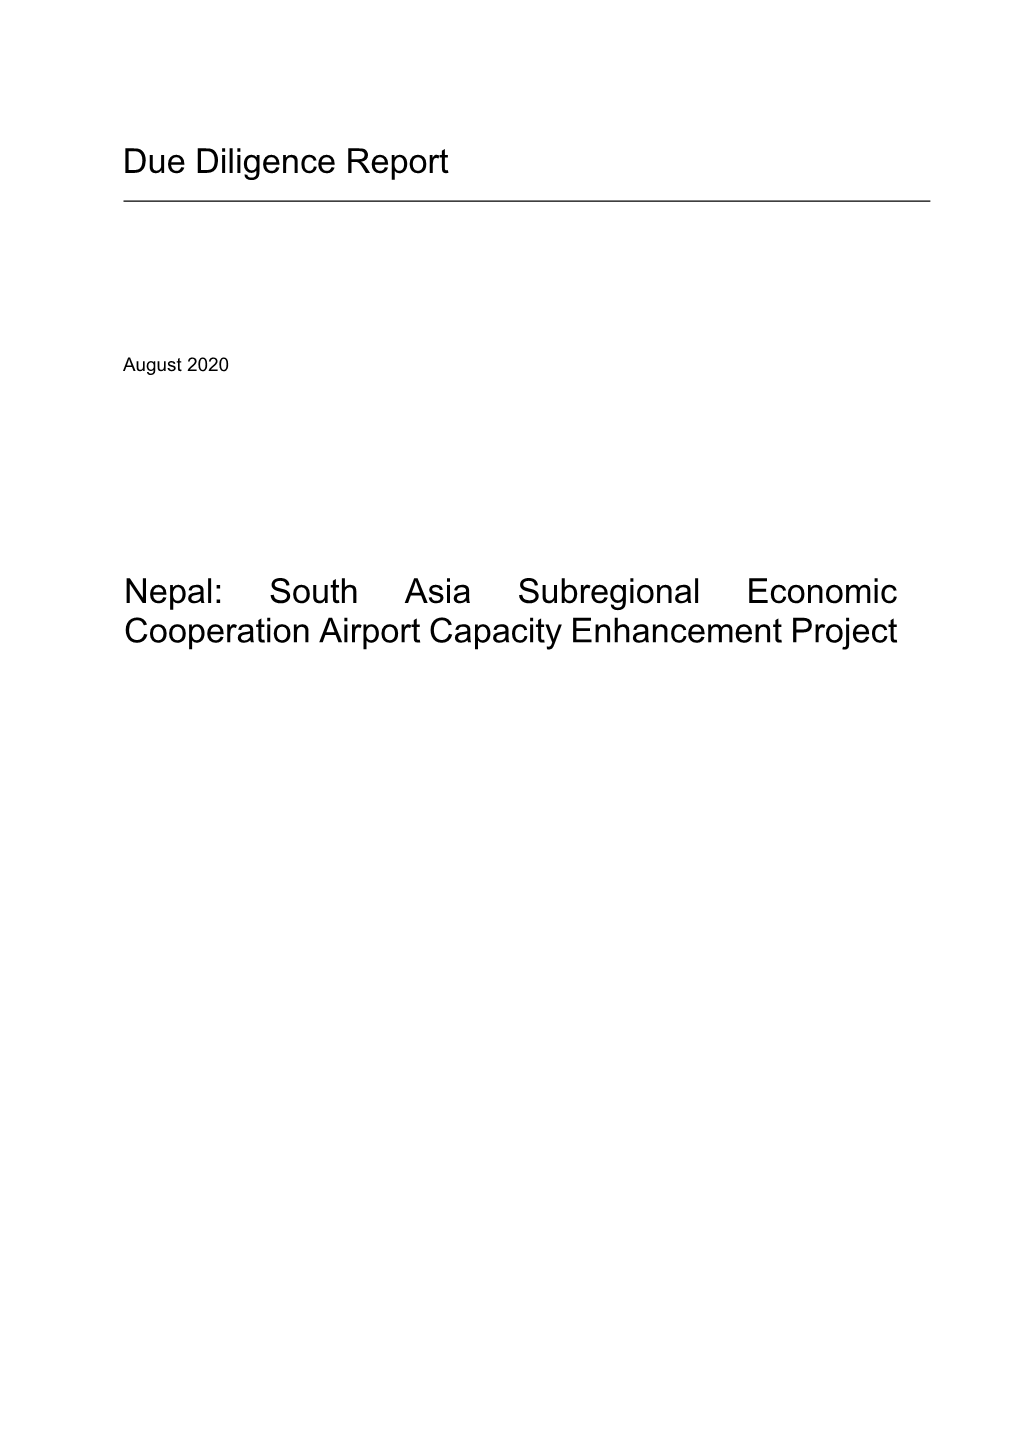 38349-031: South Asia Subregional Economic Cooperation Airport